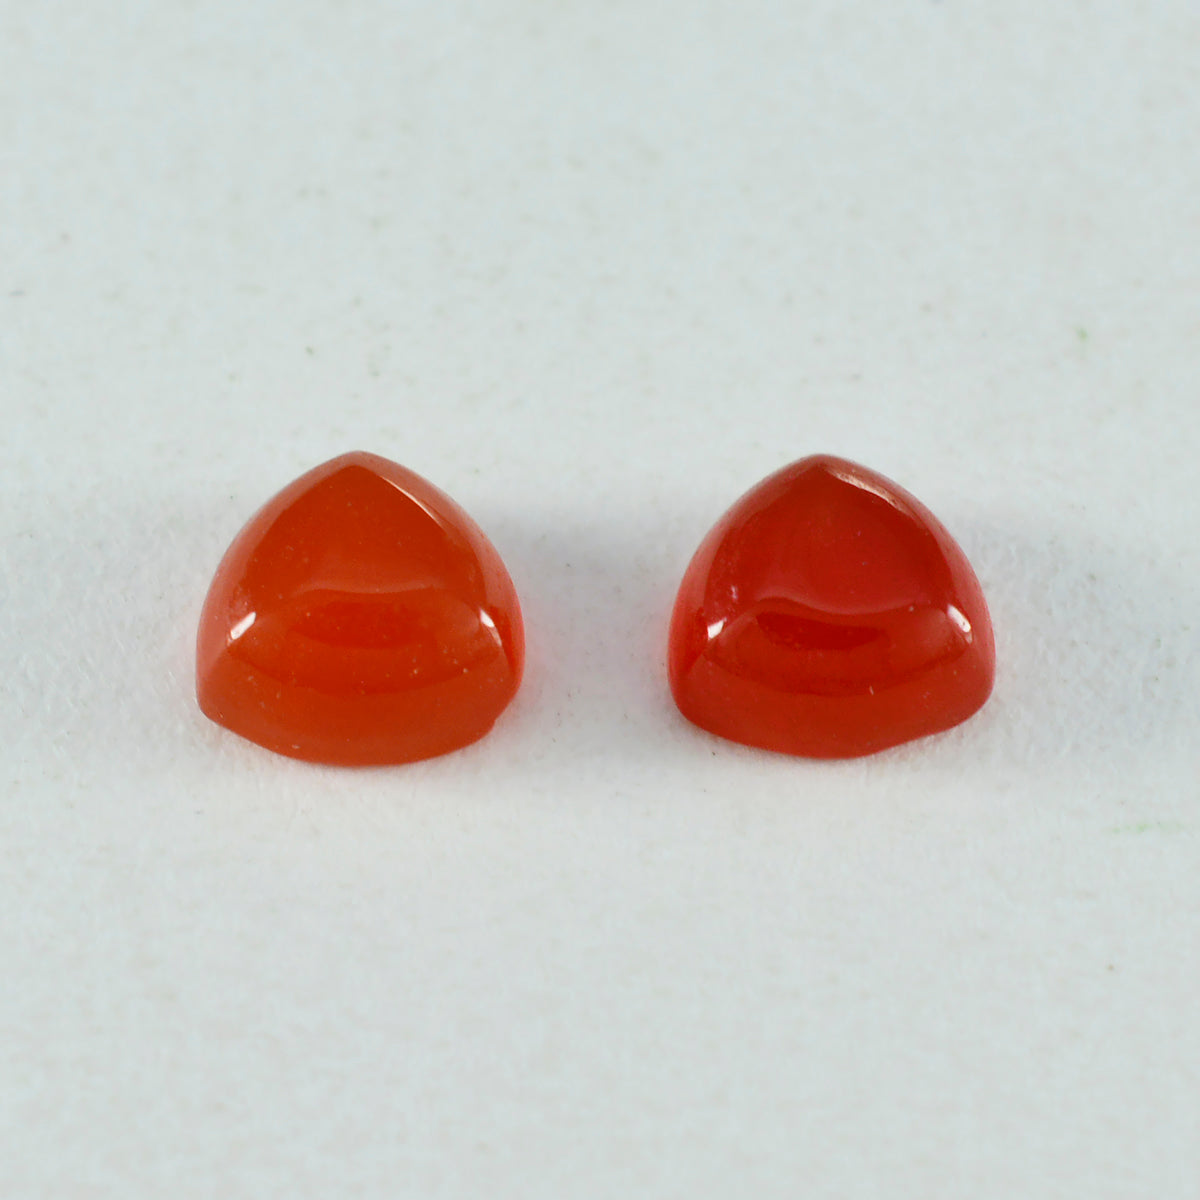 Riyogems 1 Stück roter Onyx-Cabochon, 14 x 14 mm, Billionen-Form, süßer Qualitäts-Edelstein